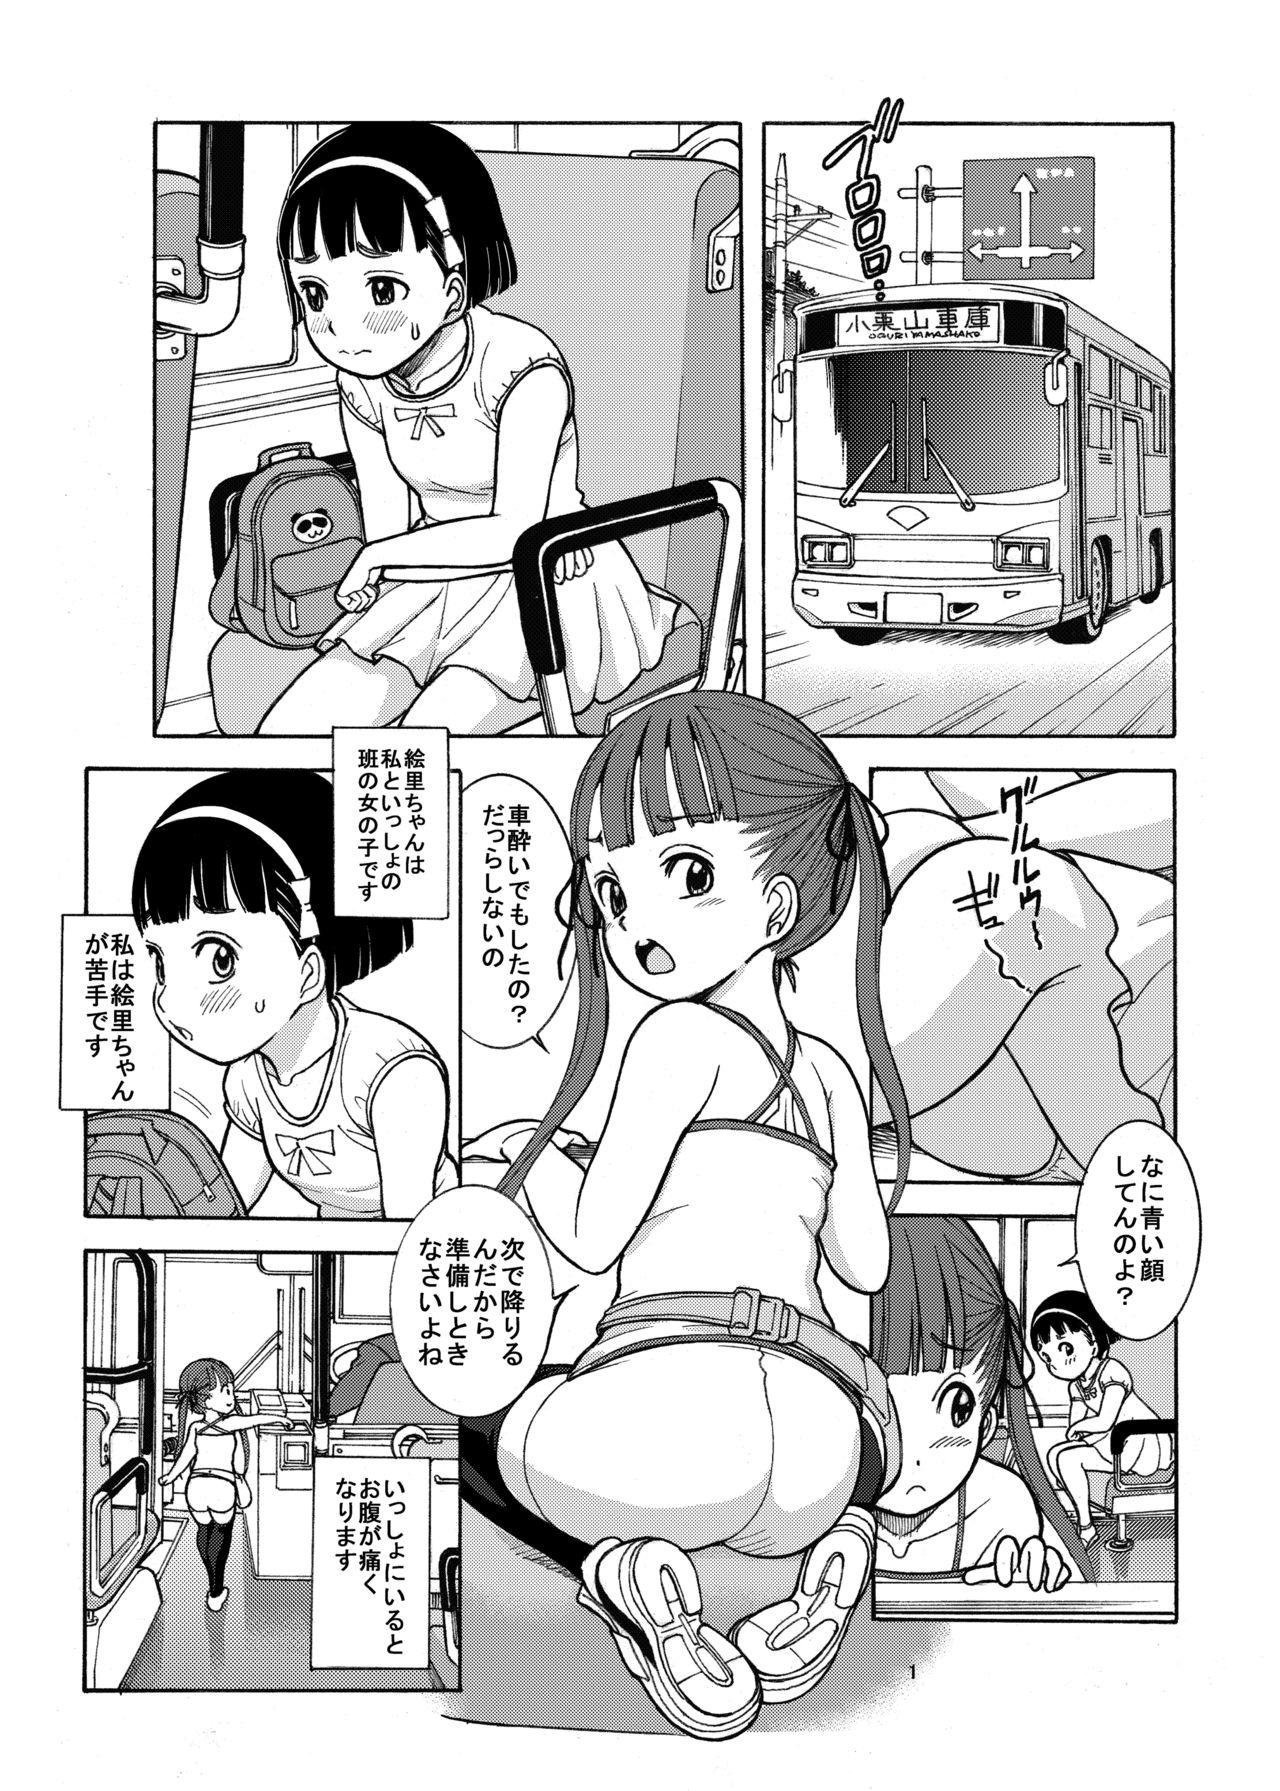 4some Naisho no Omorashi Free 18 Year Old Porn - Page 3